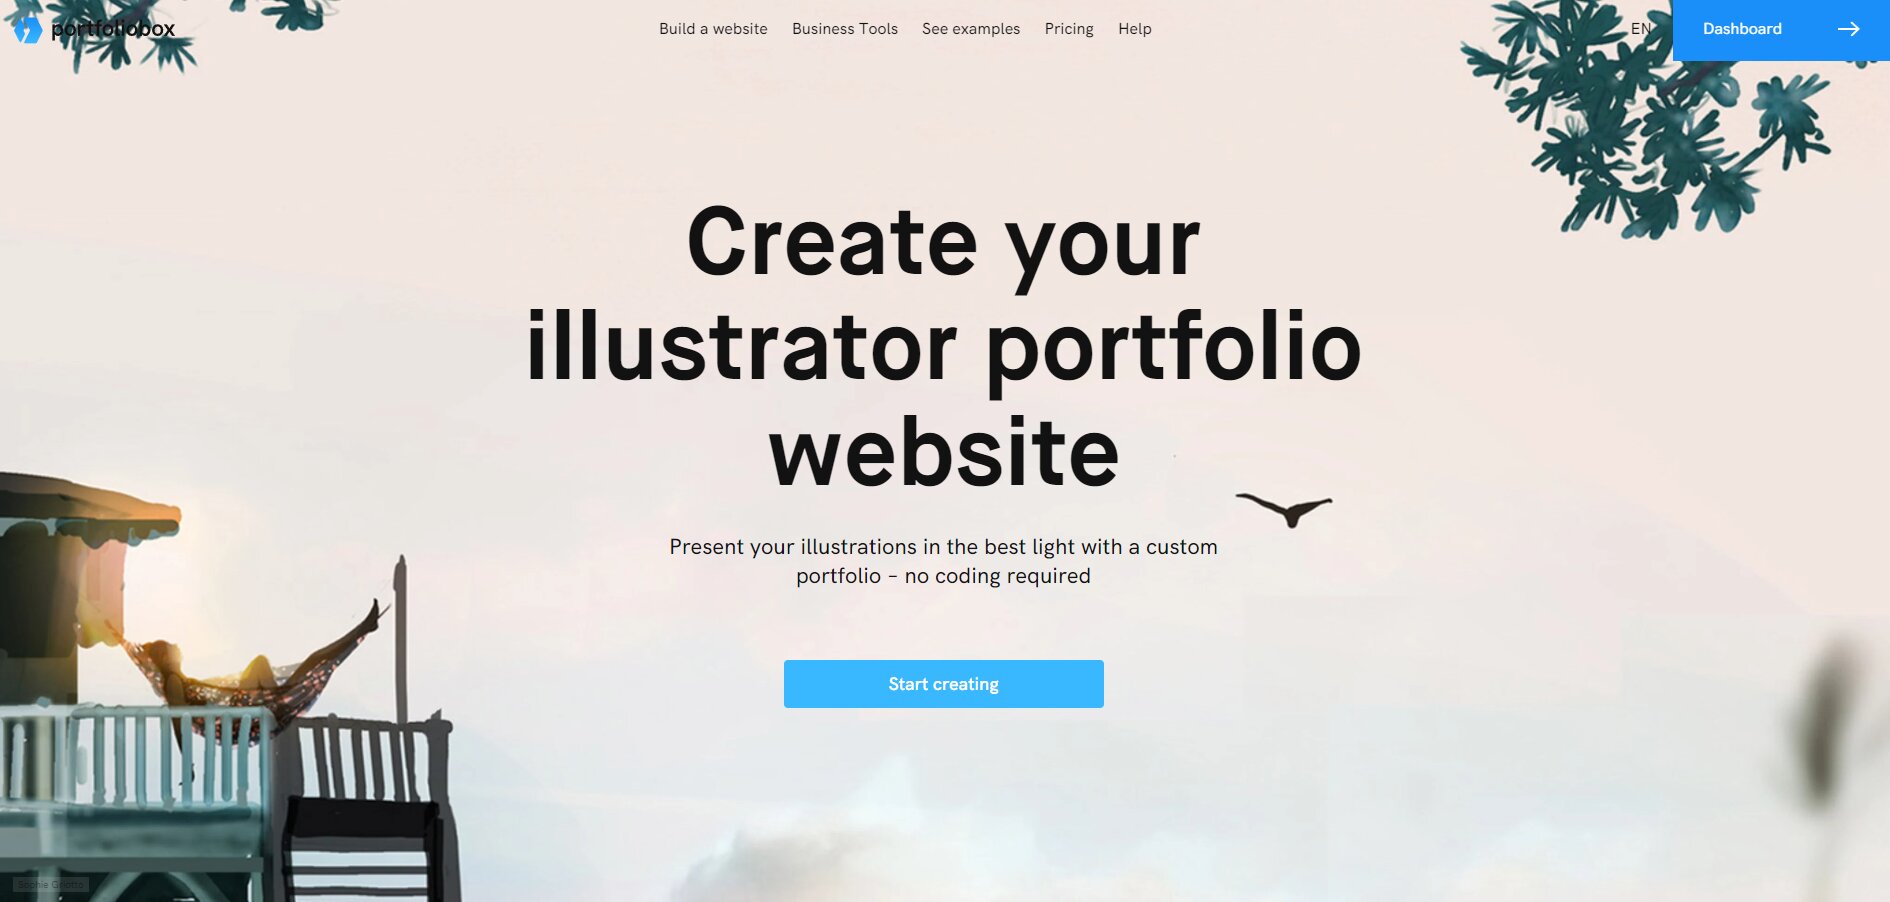 How to Create an Illustrator Portfolio Website